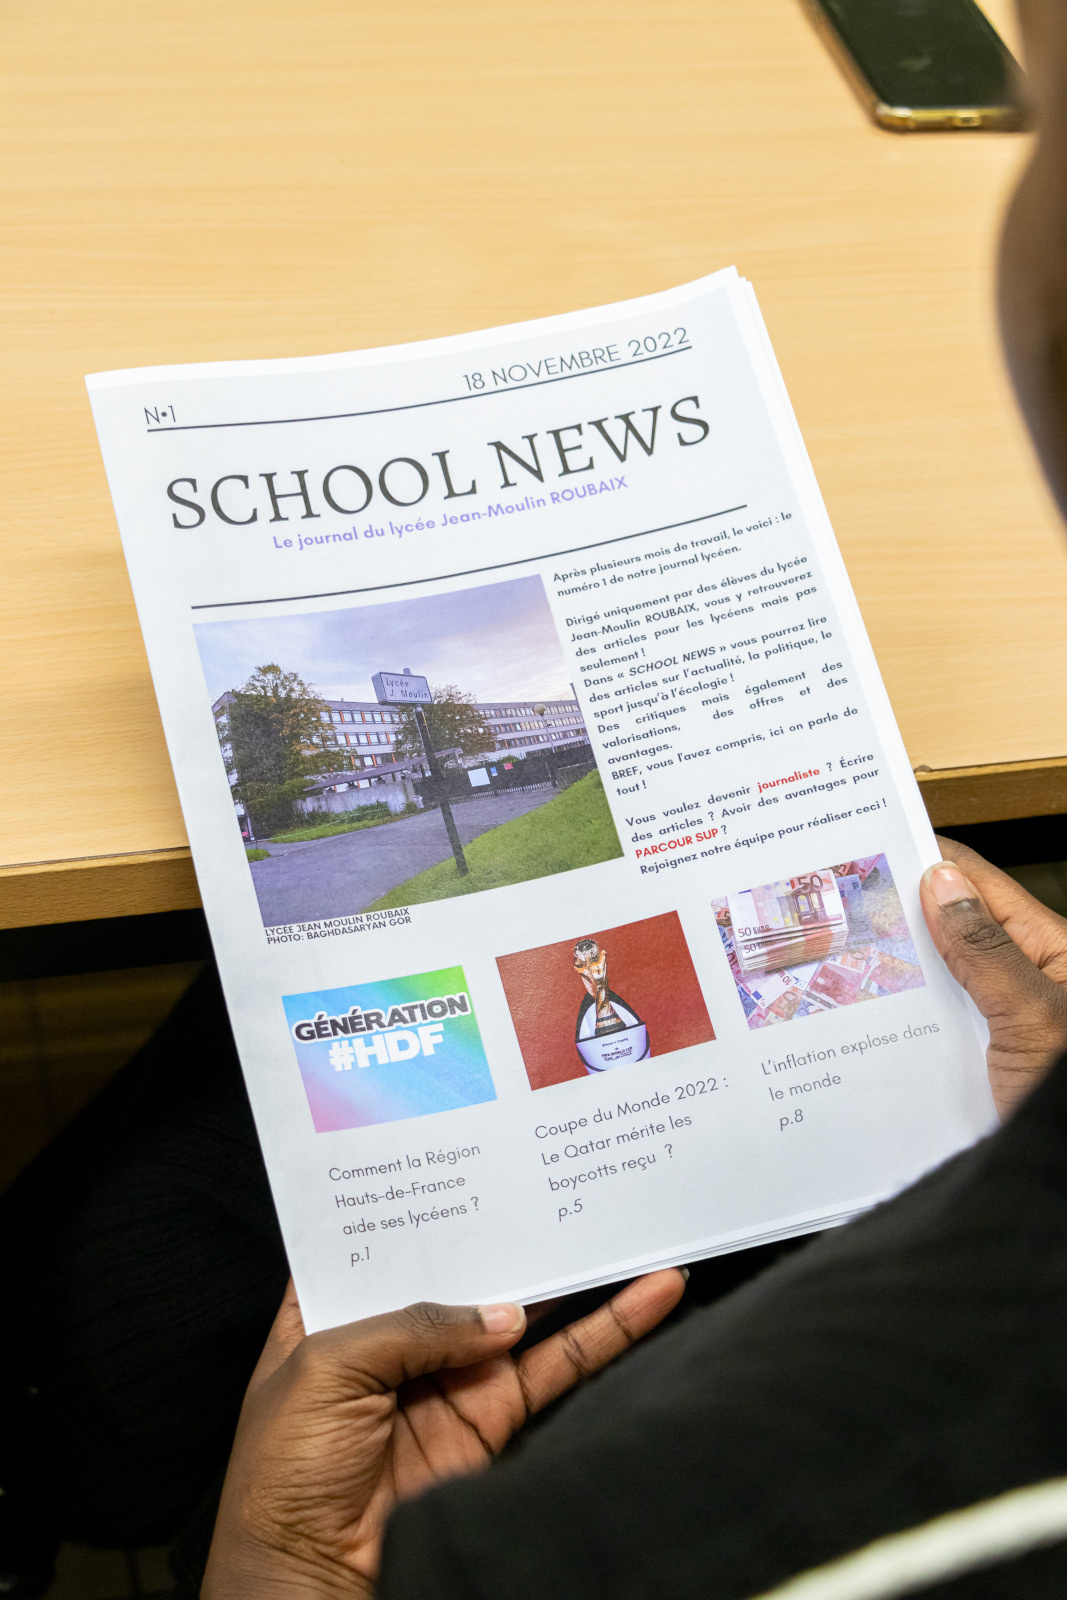 School news